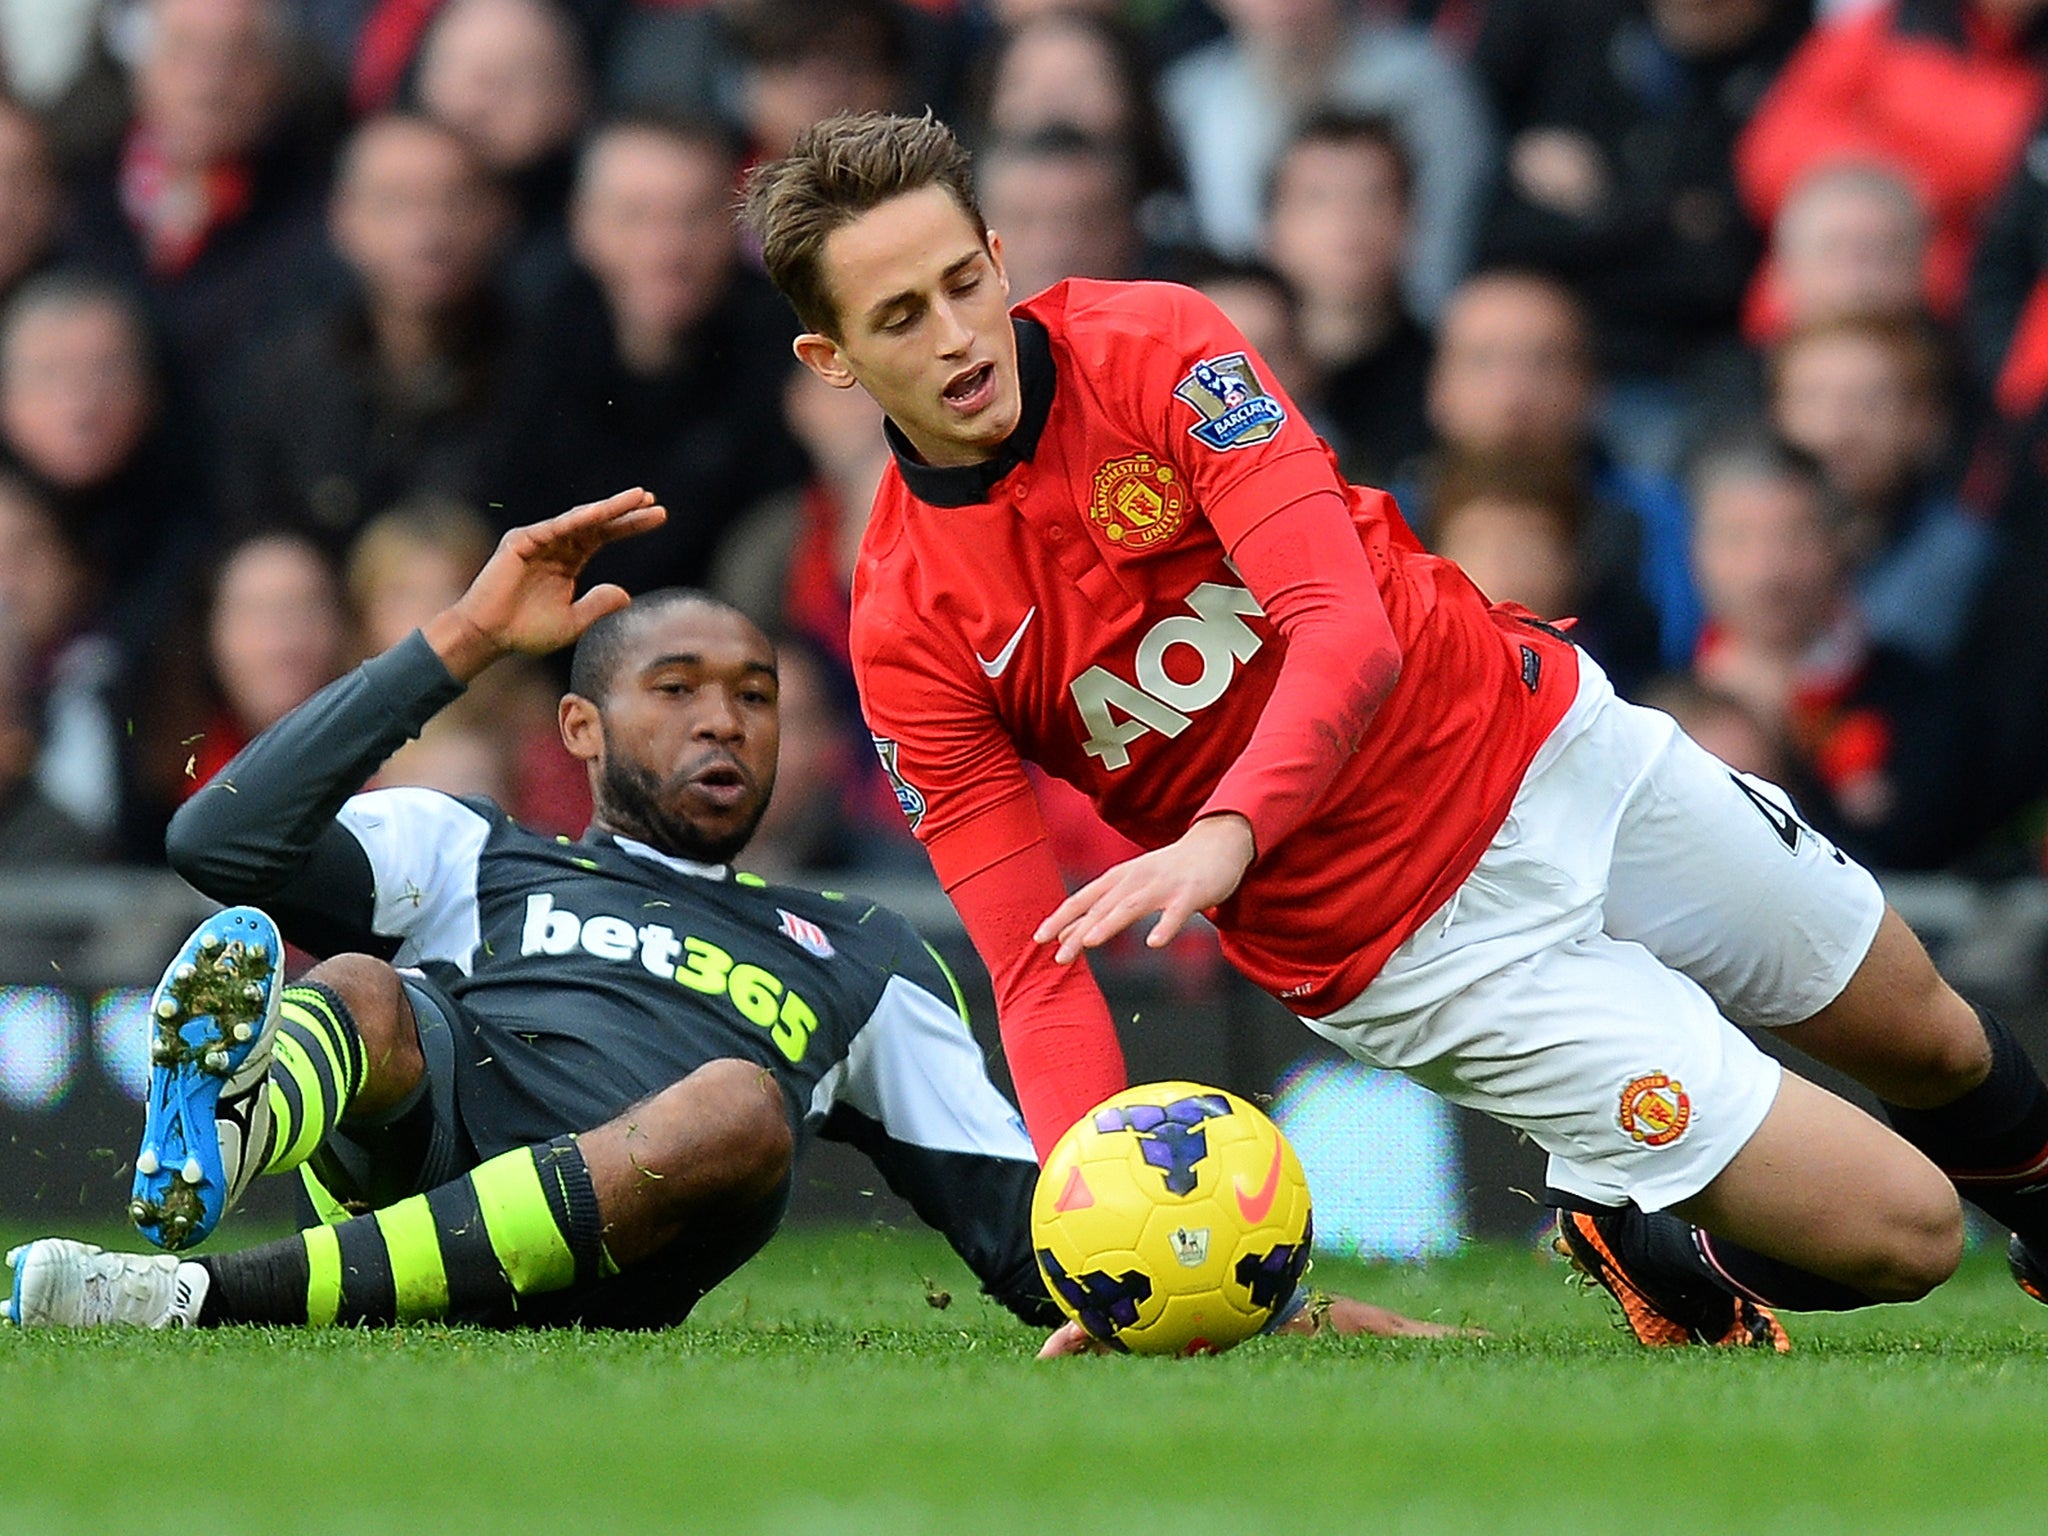 David Moyes has praised Manchester United youngster Adnan Januzaj